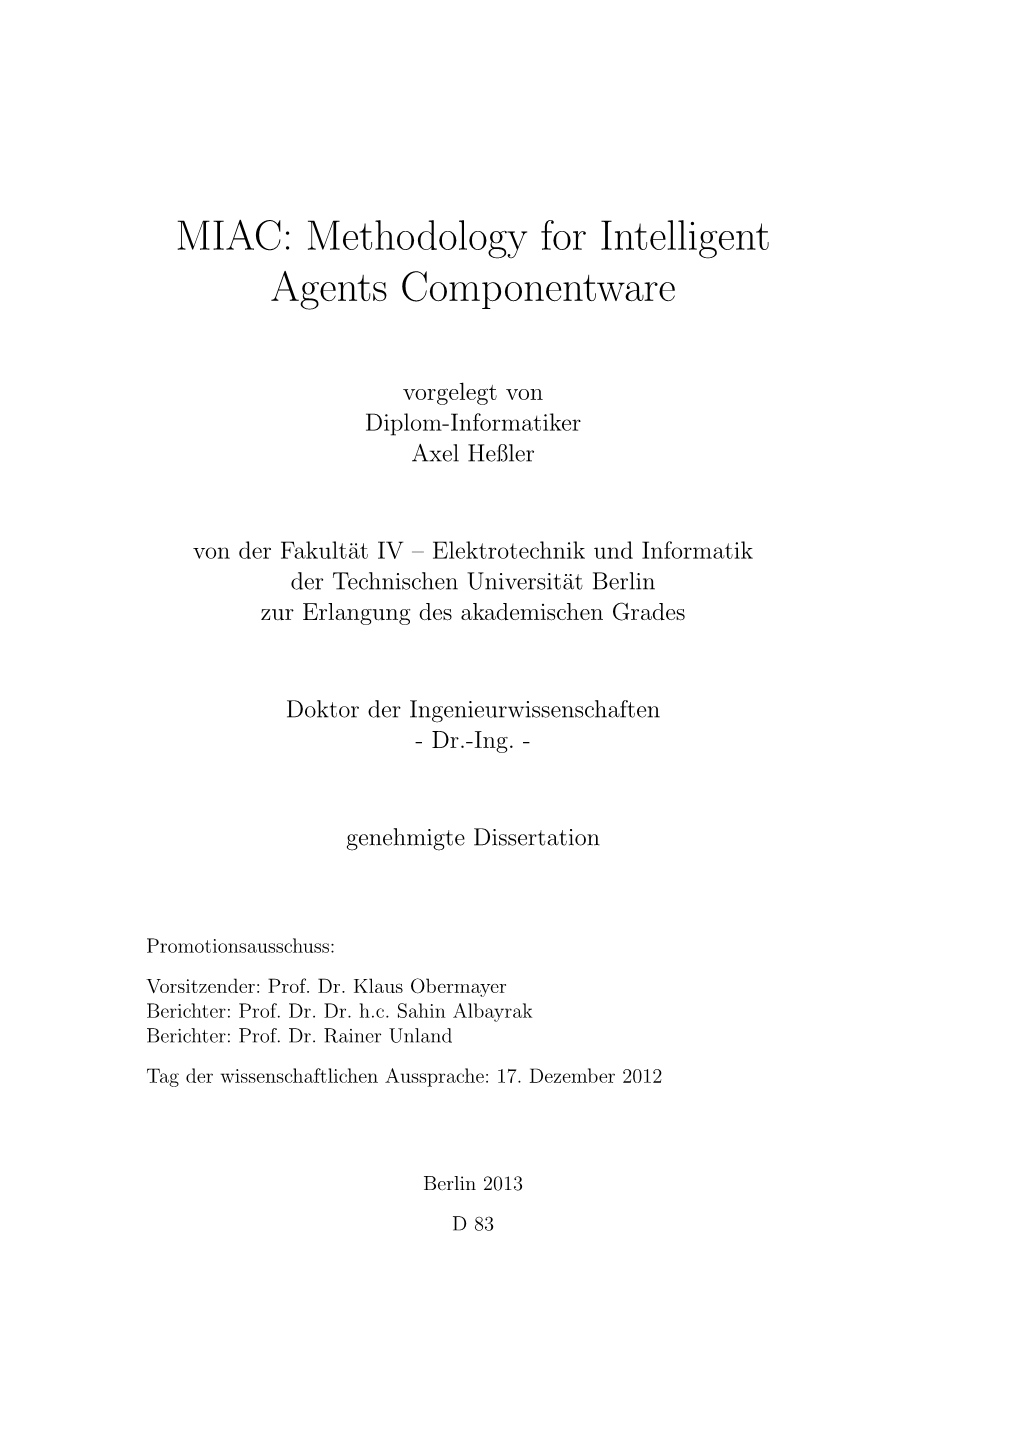 MIAC: Methodology for Intelligent Agents Componentware